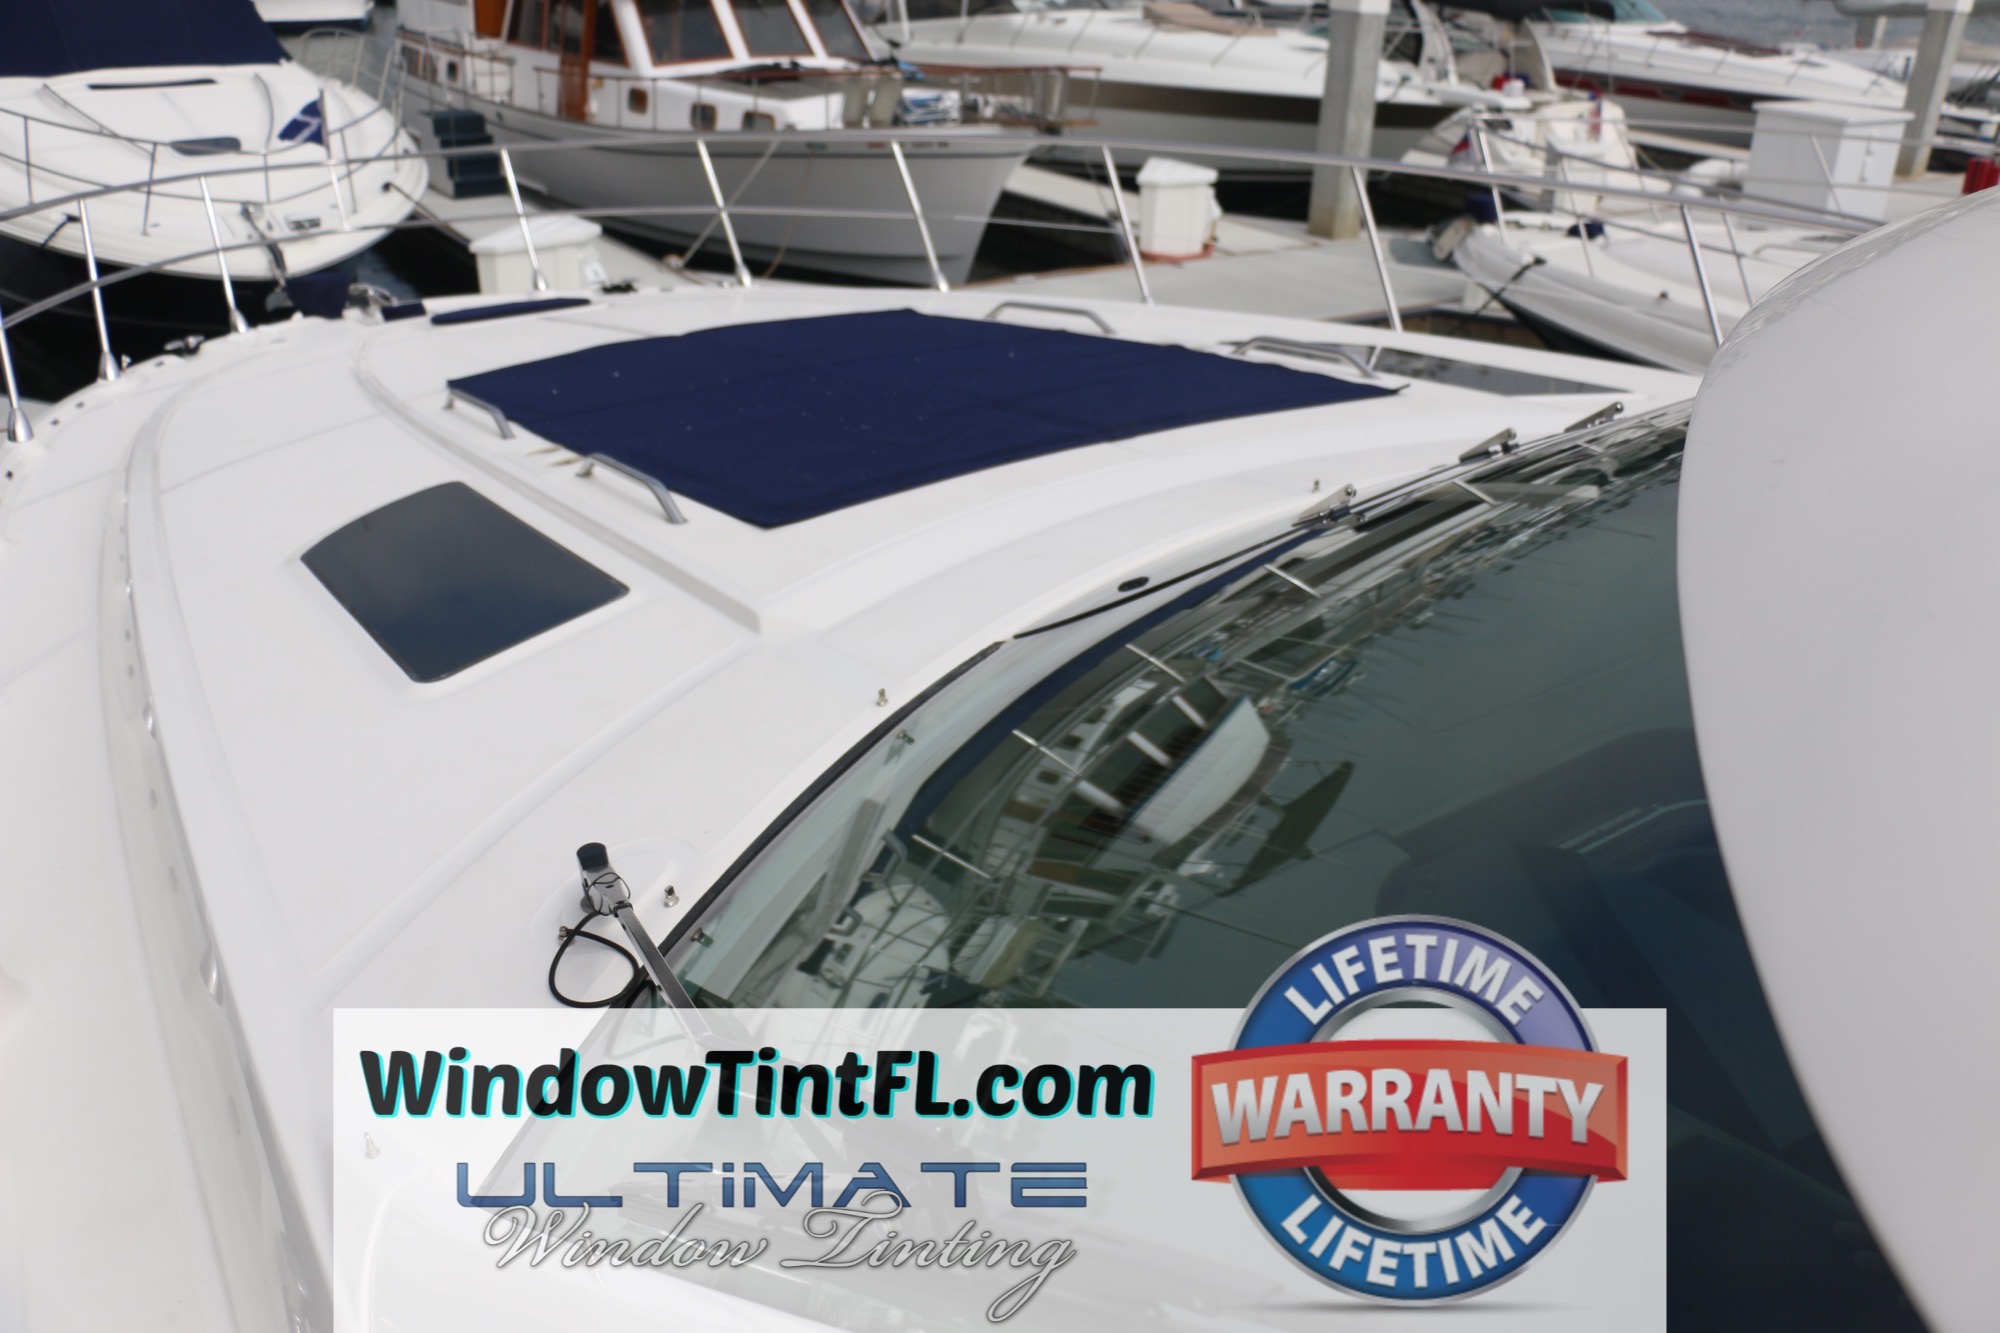 Boat Window Tint Sarasota Florida Marine Solar Window Film